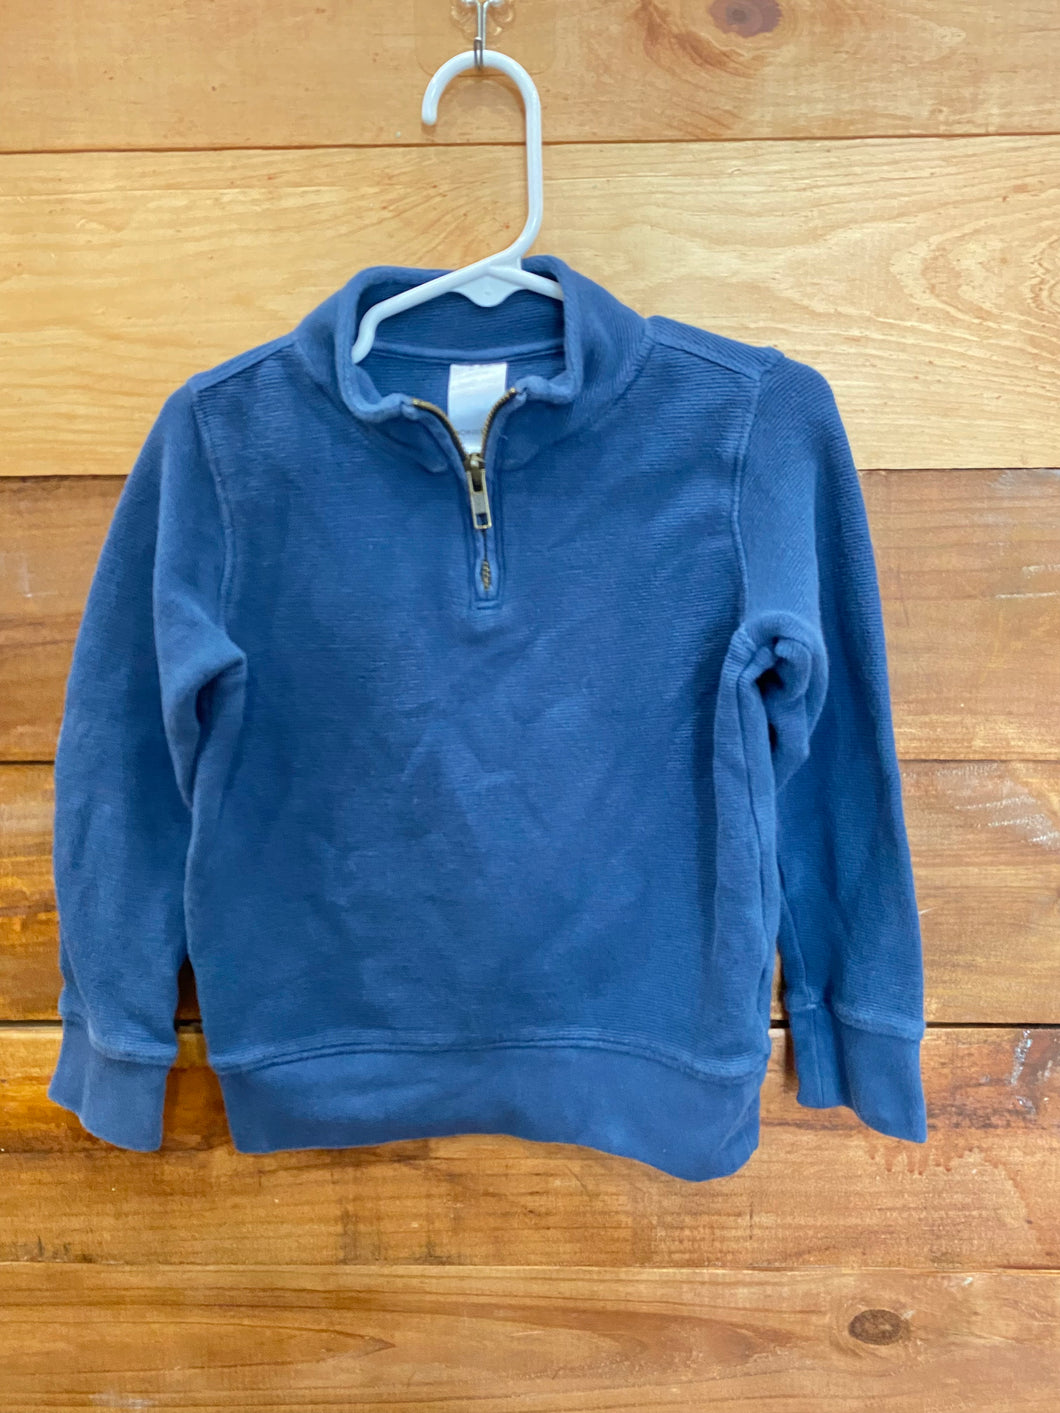 Nordstrom Blue Pullover Size 4